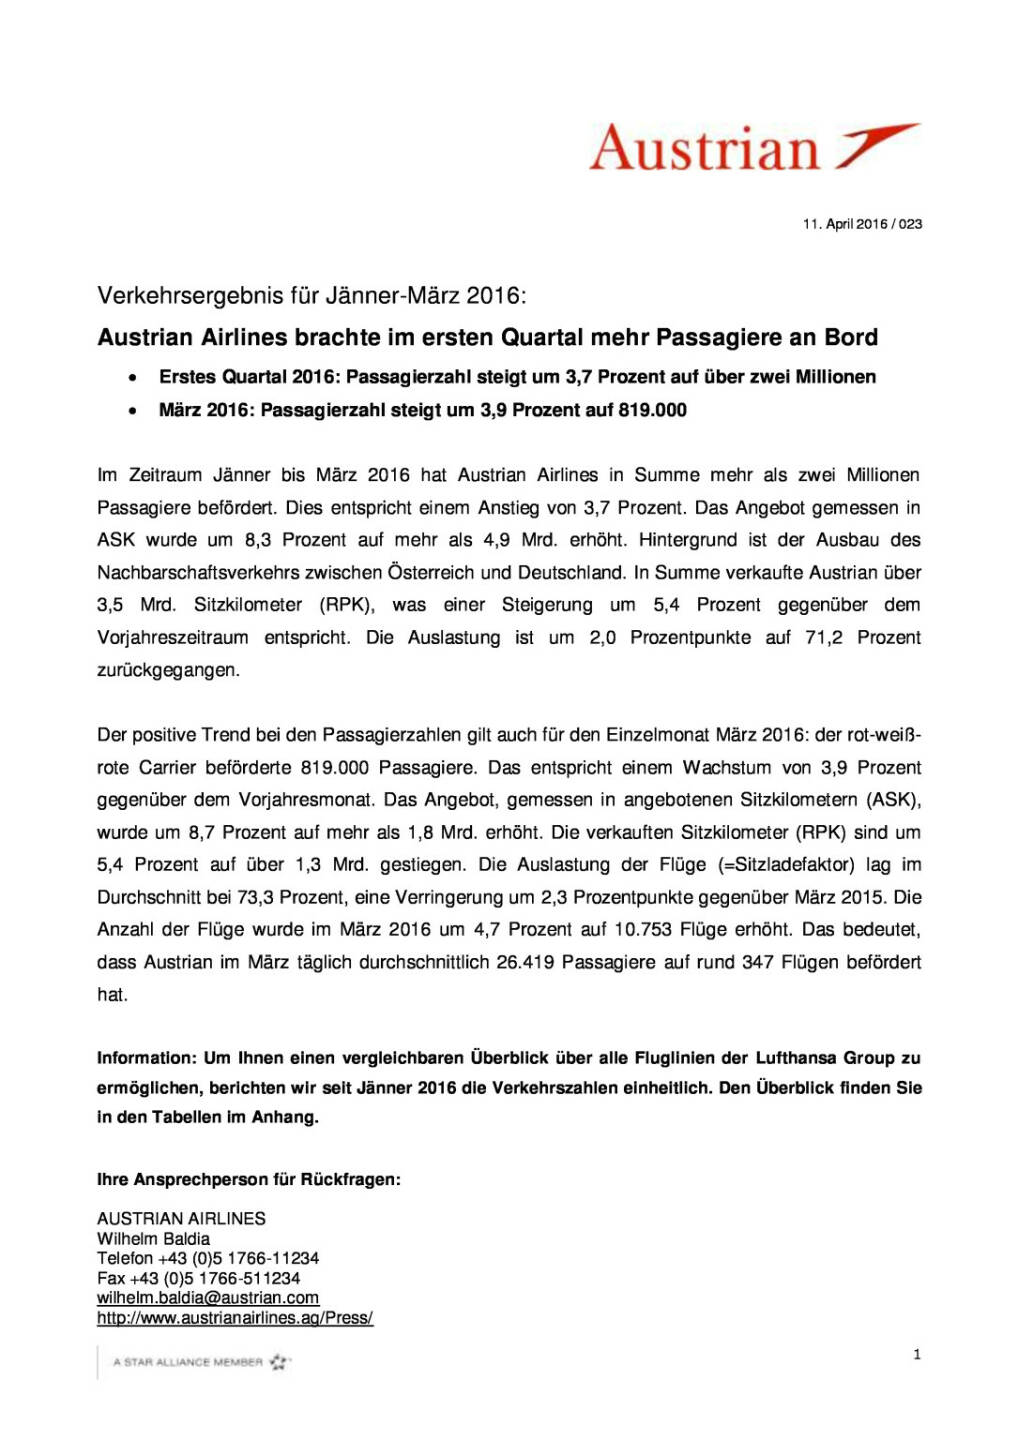 Austrian Airlines brachte im ersten Quartal mehr Passagiere an Bord, Seite 1/3, komplettes Dokument unter http://boerse-social.com/static/uploads/file_868_austrian_airlines_brachte_im_ersten_quartal_mehr_passagiere_an_bord.pdf